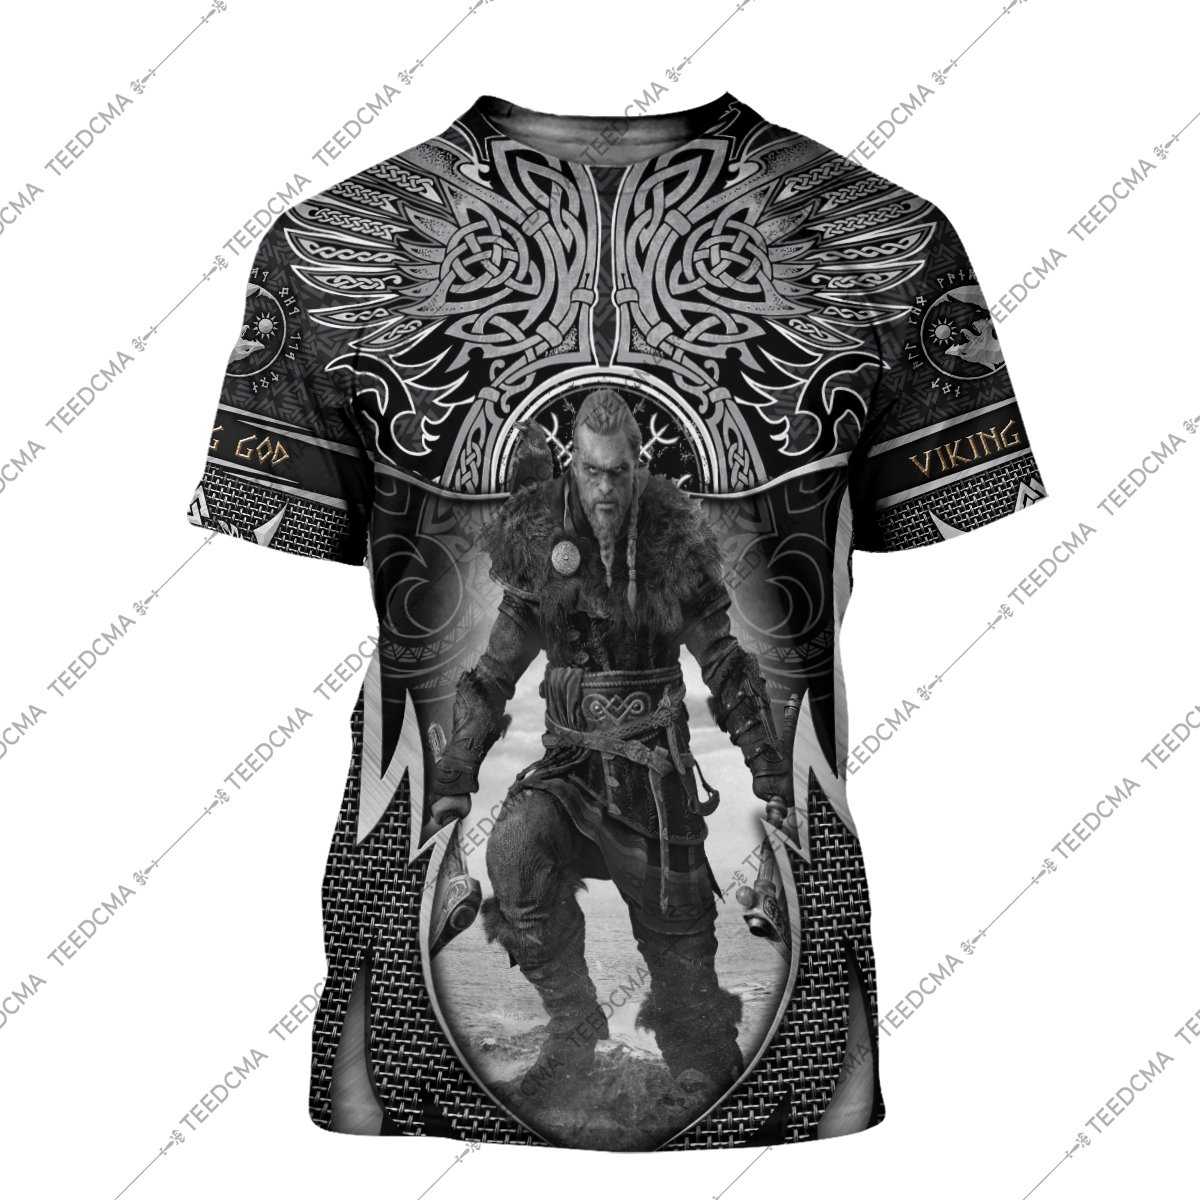 assassin's creed valhalla viking all over printed tshirt